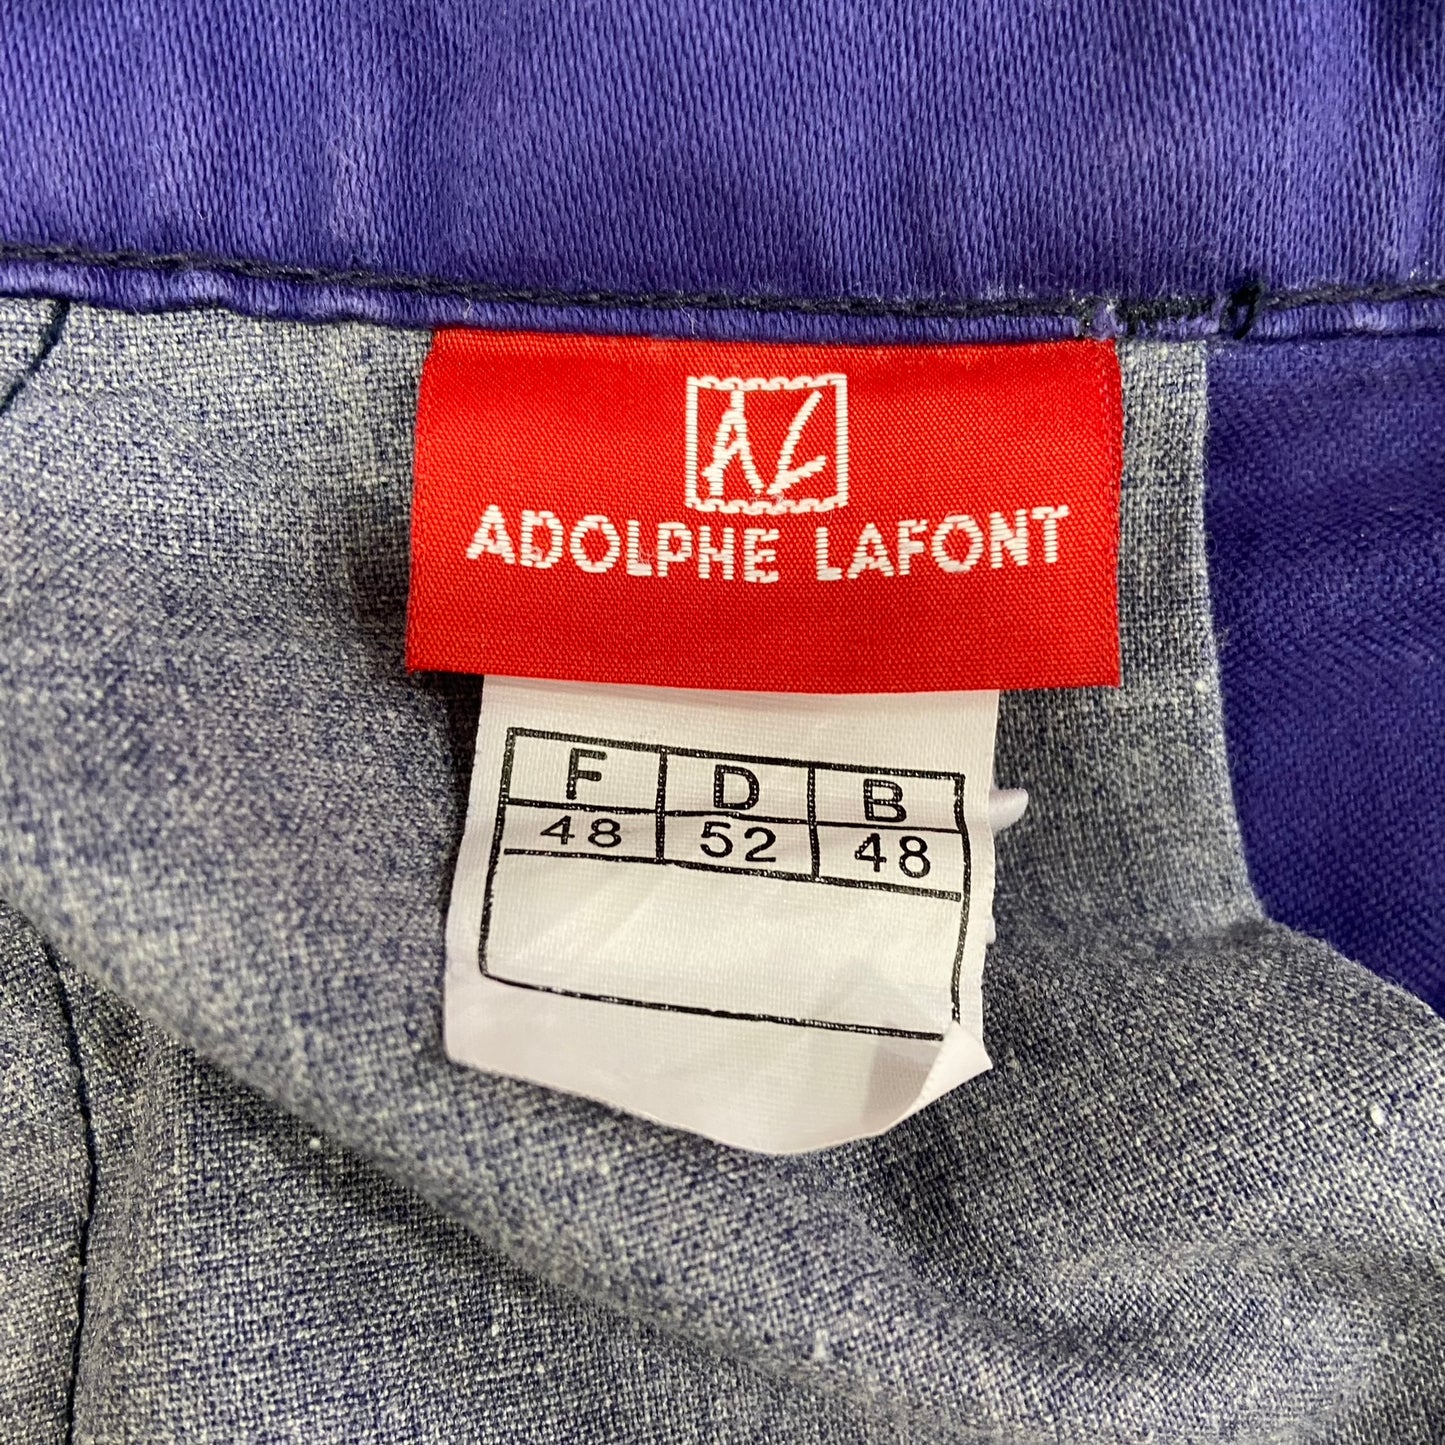 Adolphe Lafont moleskin trousers, French workwear size 38" waist